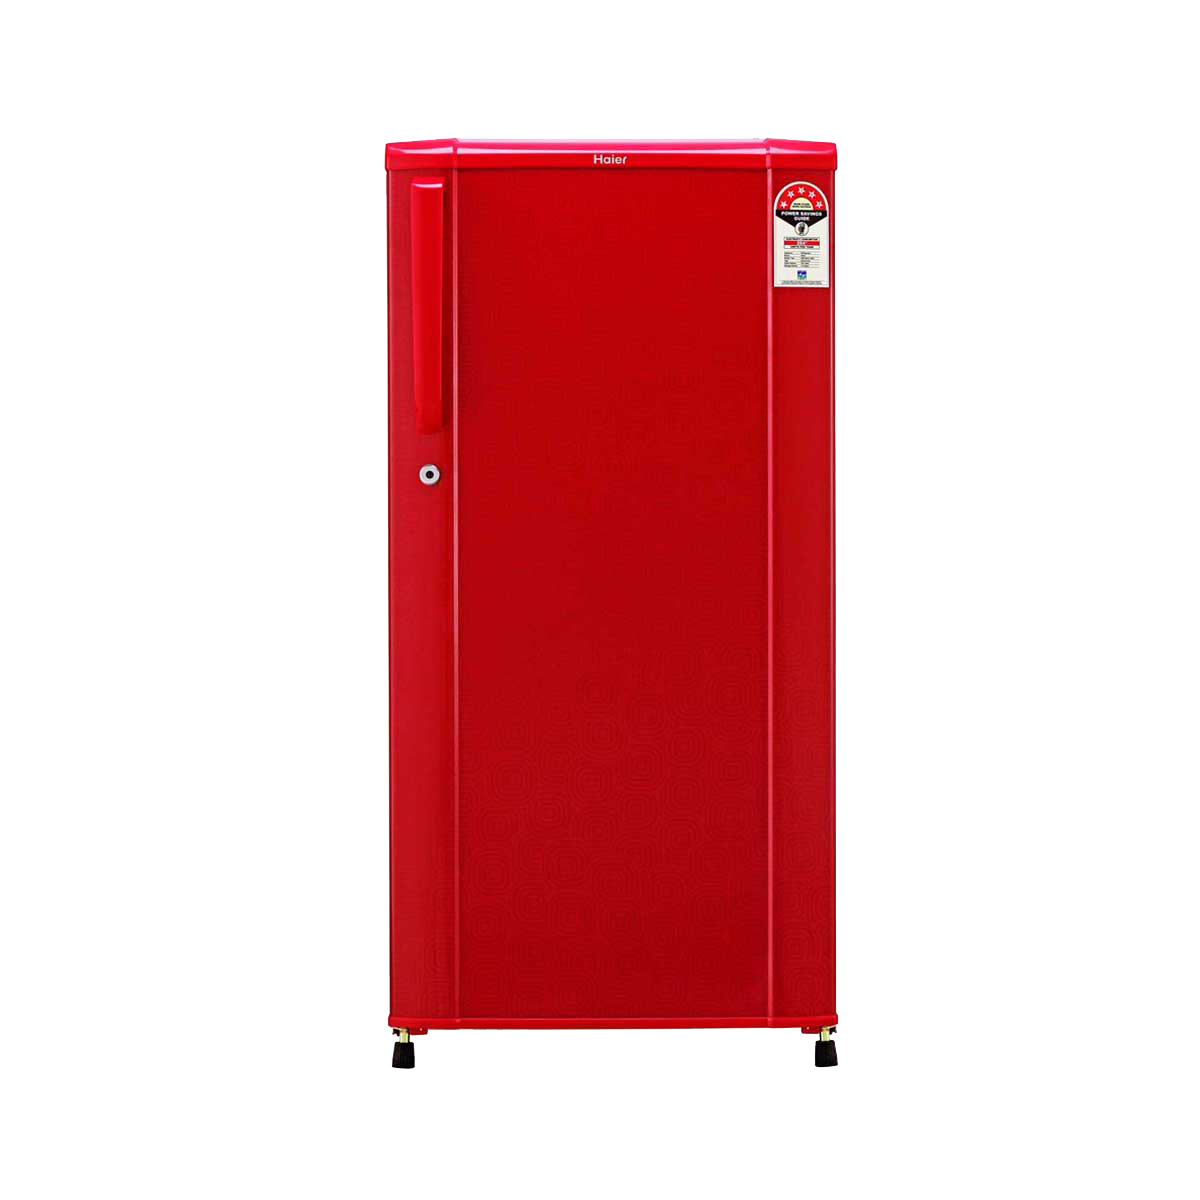 Single Door Refrigerator Png Image - Refrigerator, Transparent background PNG HD thumbnail